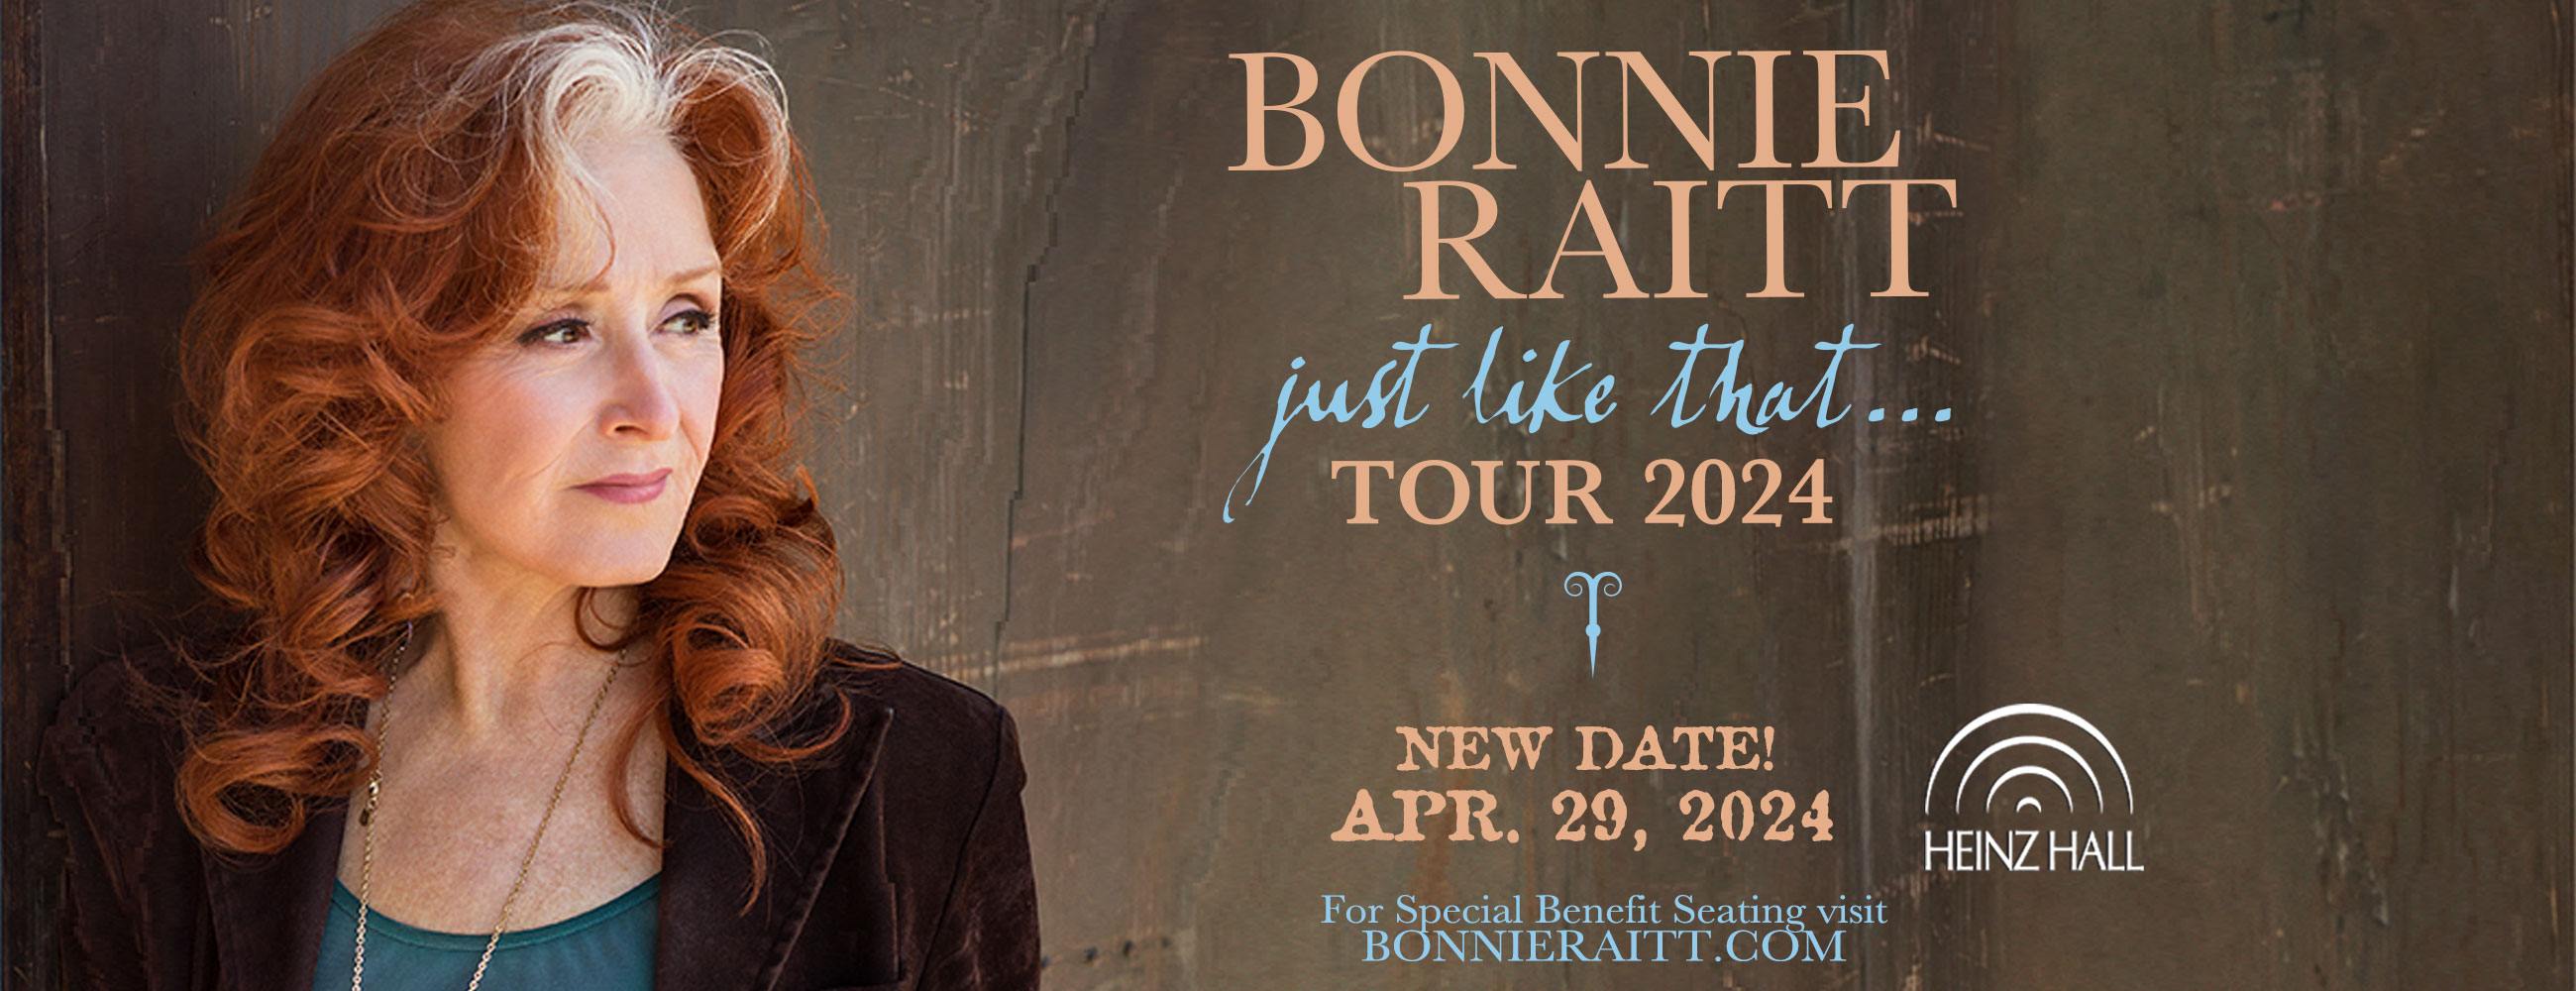 bonnie raitt current tour